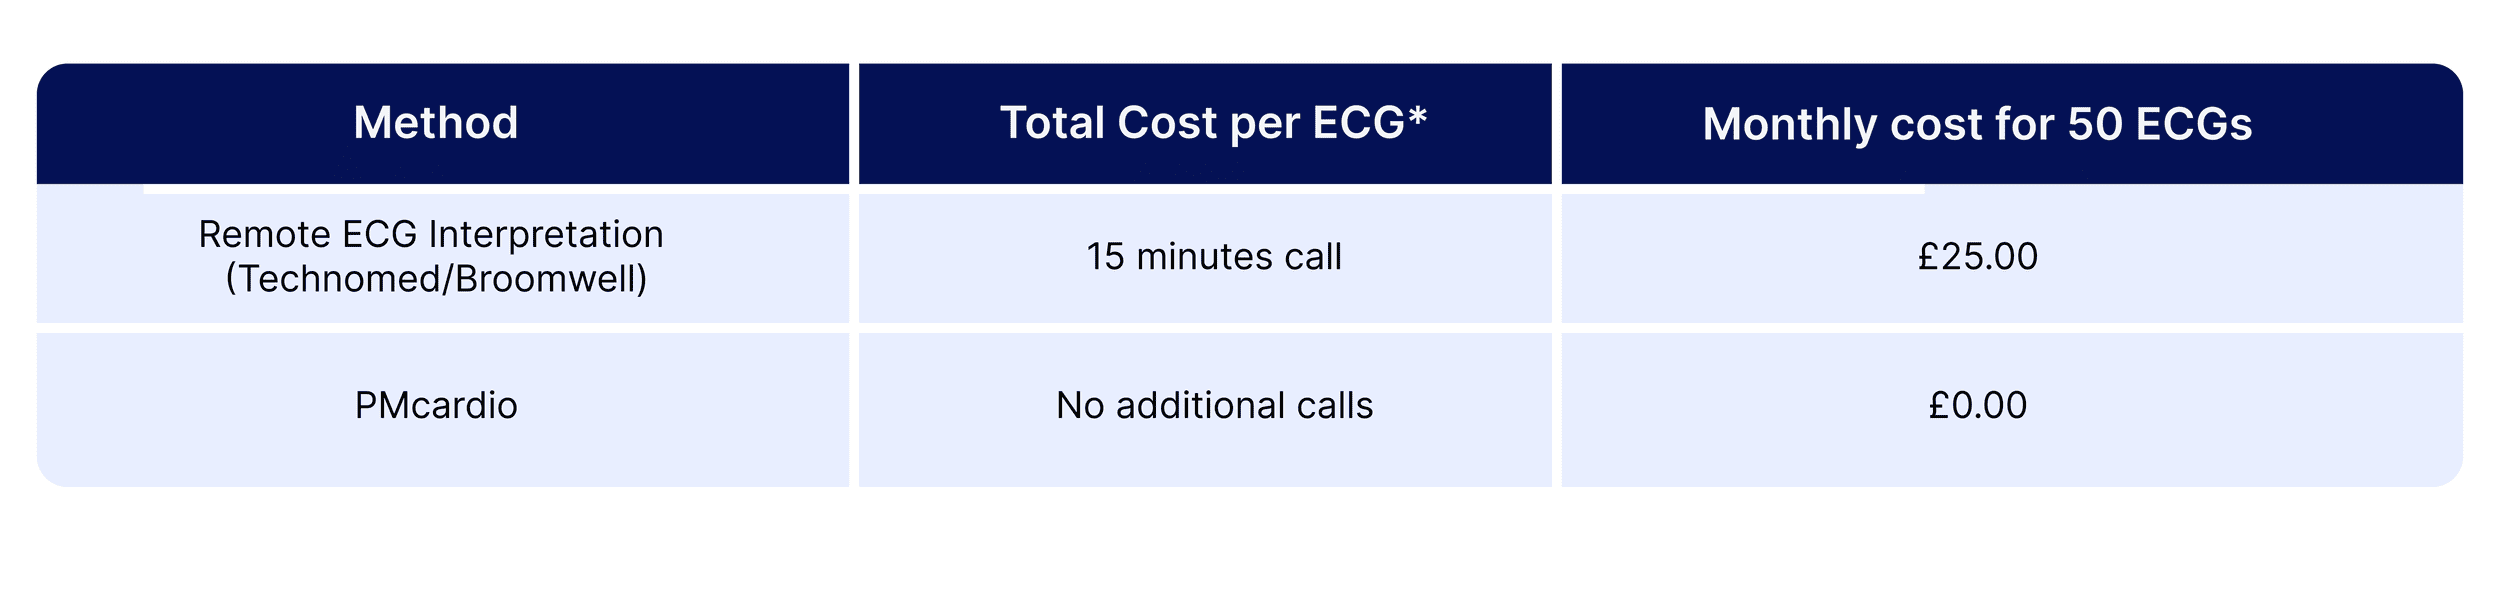 Remote ECG Interpretation Services: PMcardio as the Emerging Favorite